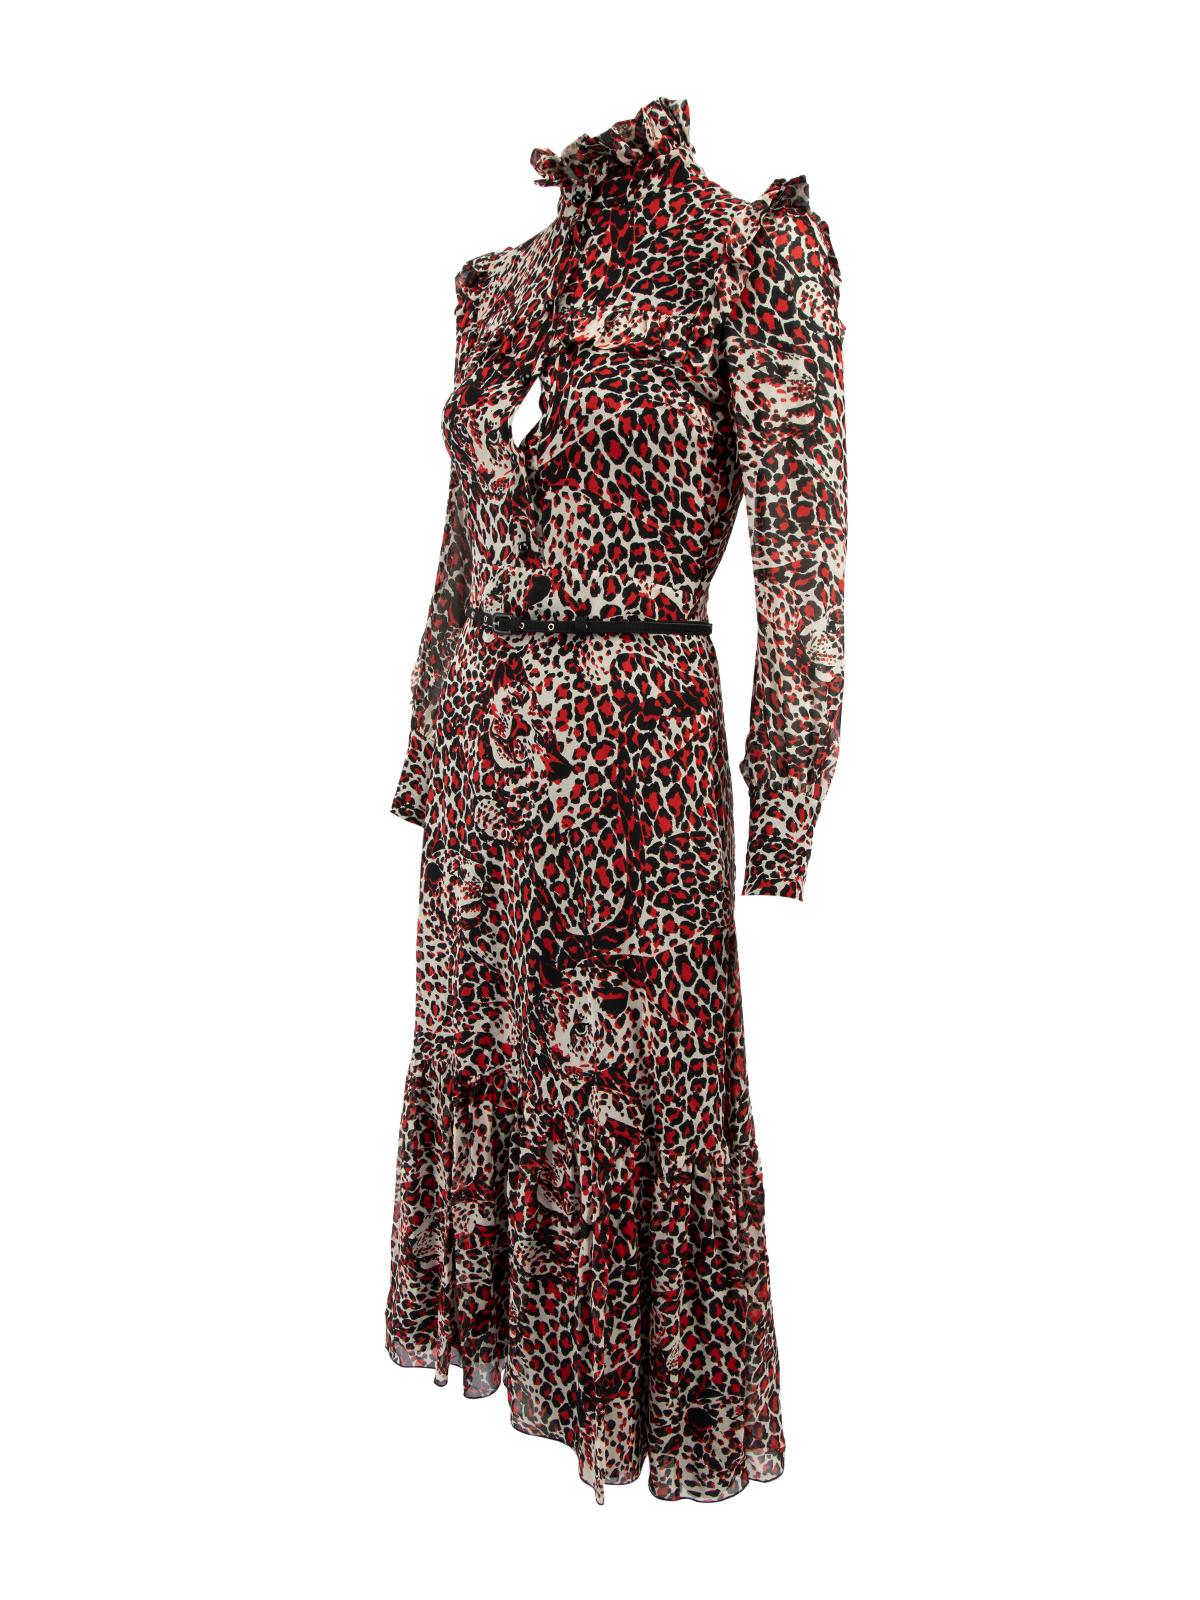 Pre-Loved Saint Laurent Women's Patterned Maxi Dress with Belt 1